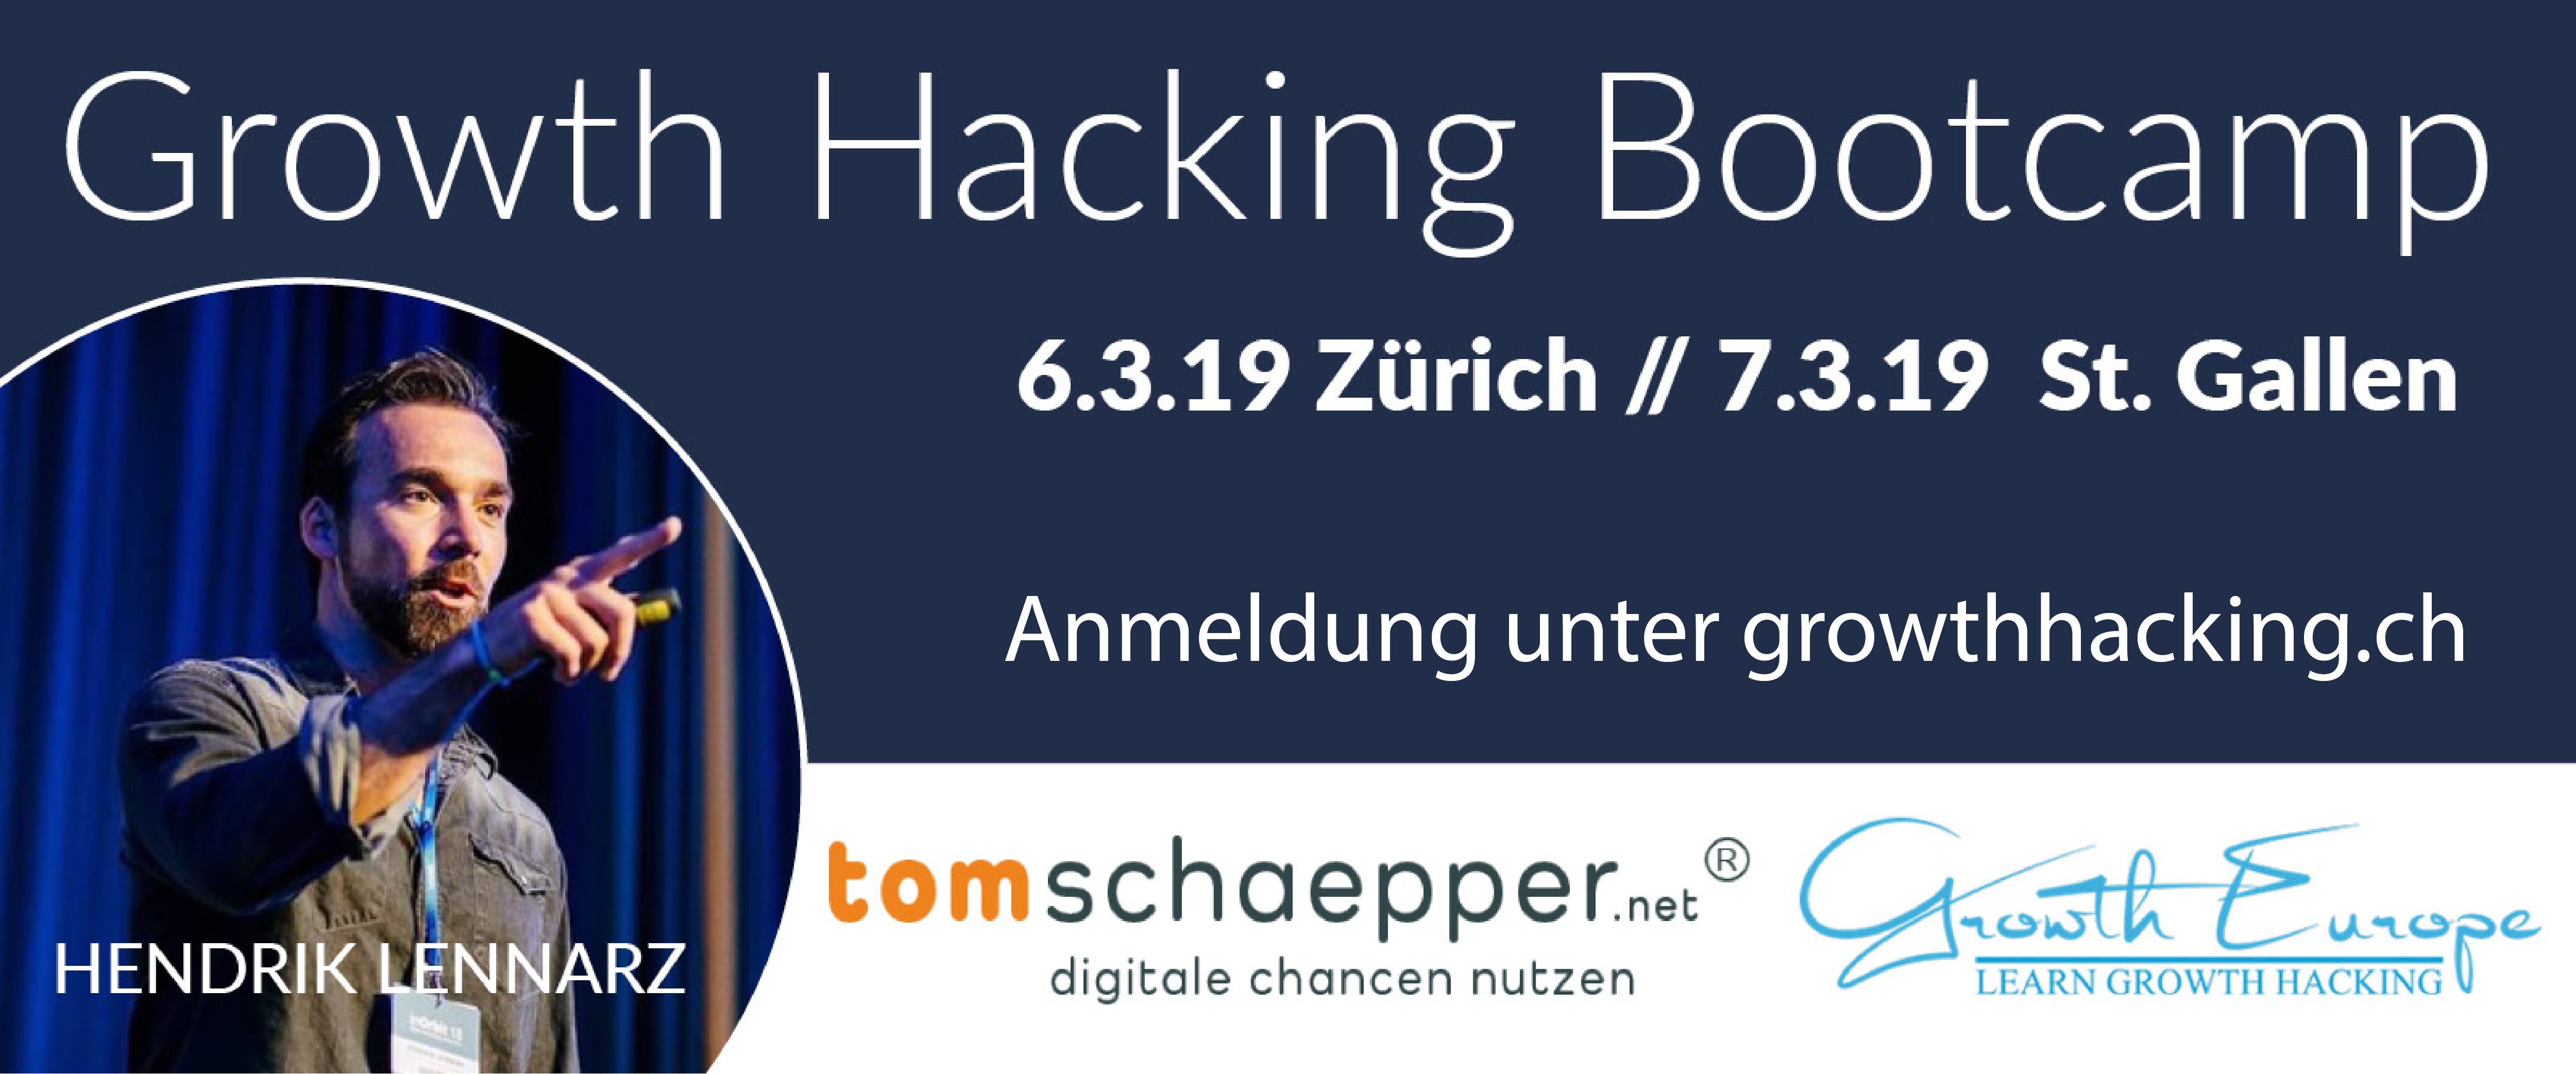 Growth hacking Banner 1200x500px 040219 01 - Growth Hacking Bootcamp mit Hendrik Lennarz